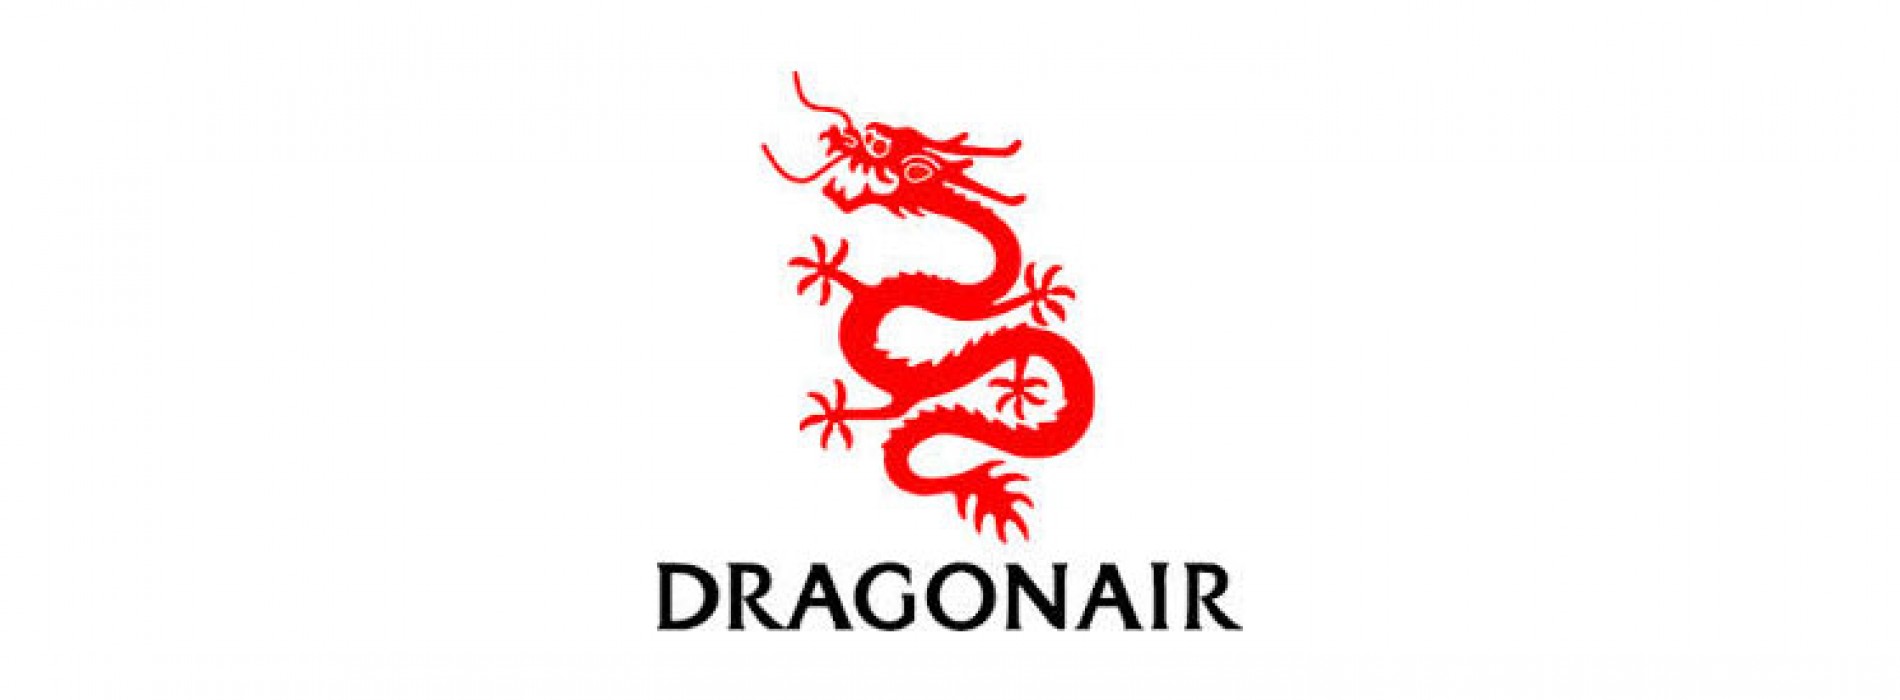 Dragonair introduces self-print boarding pass for passengers departing from Bengaluru